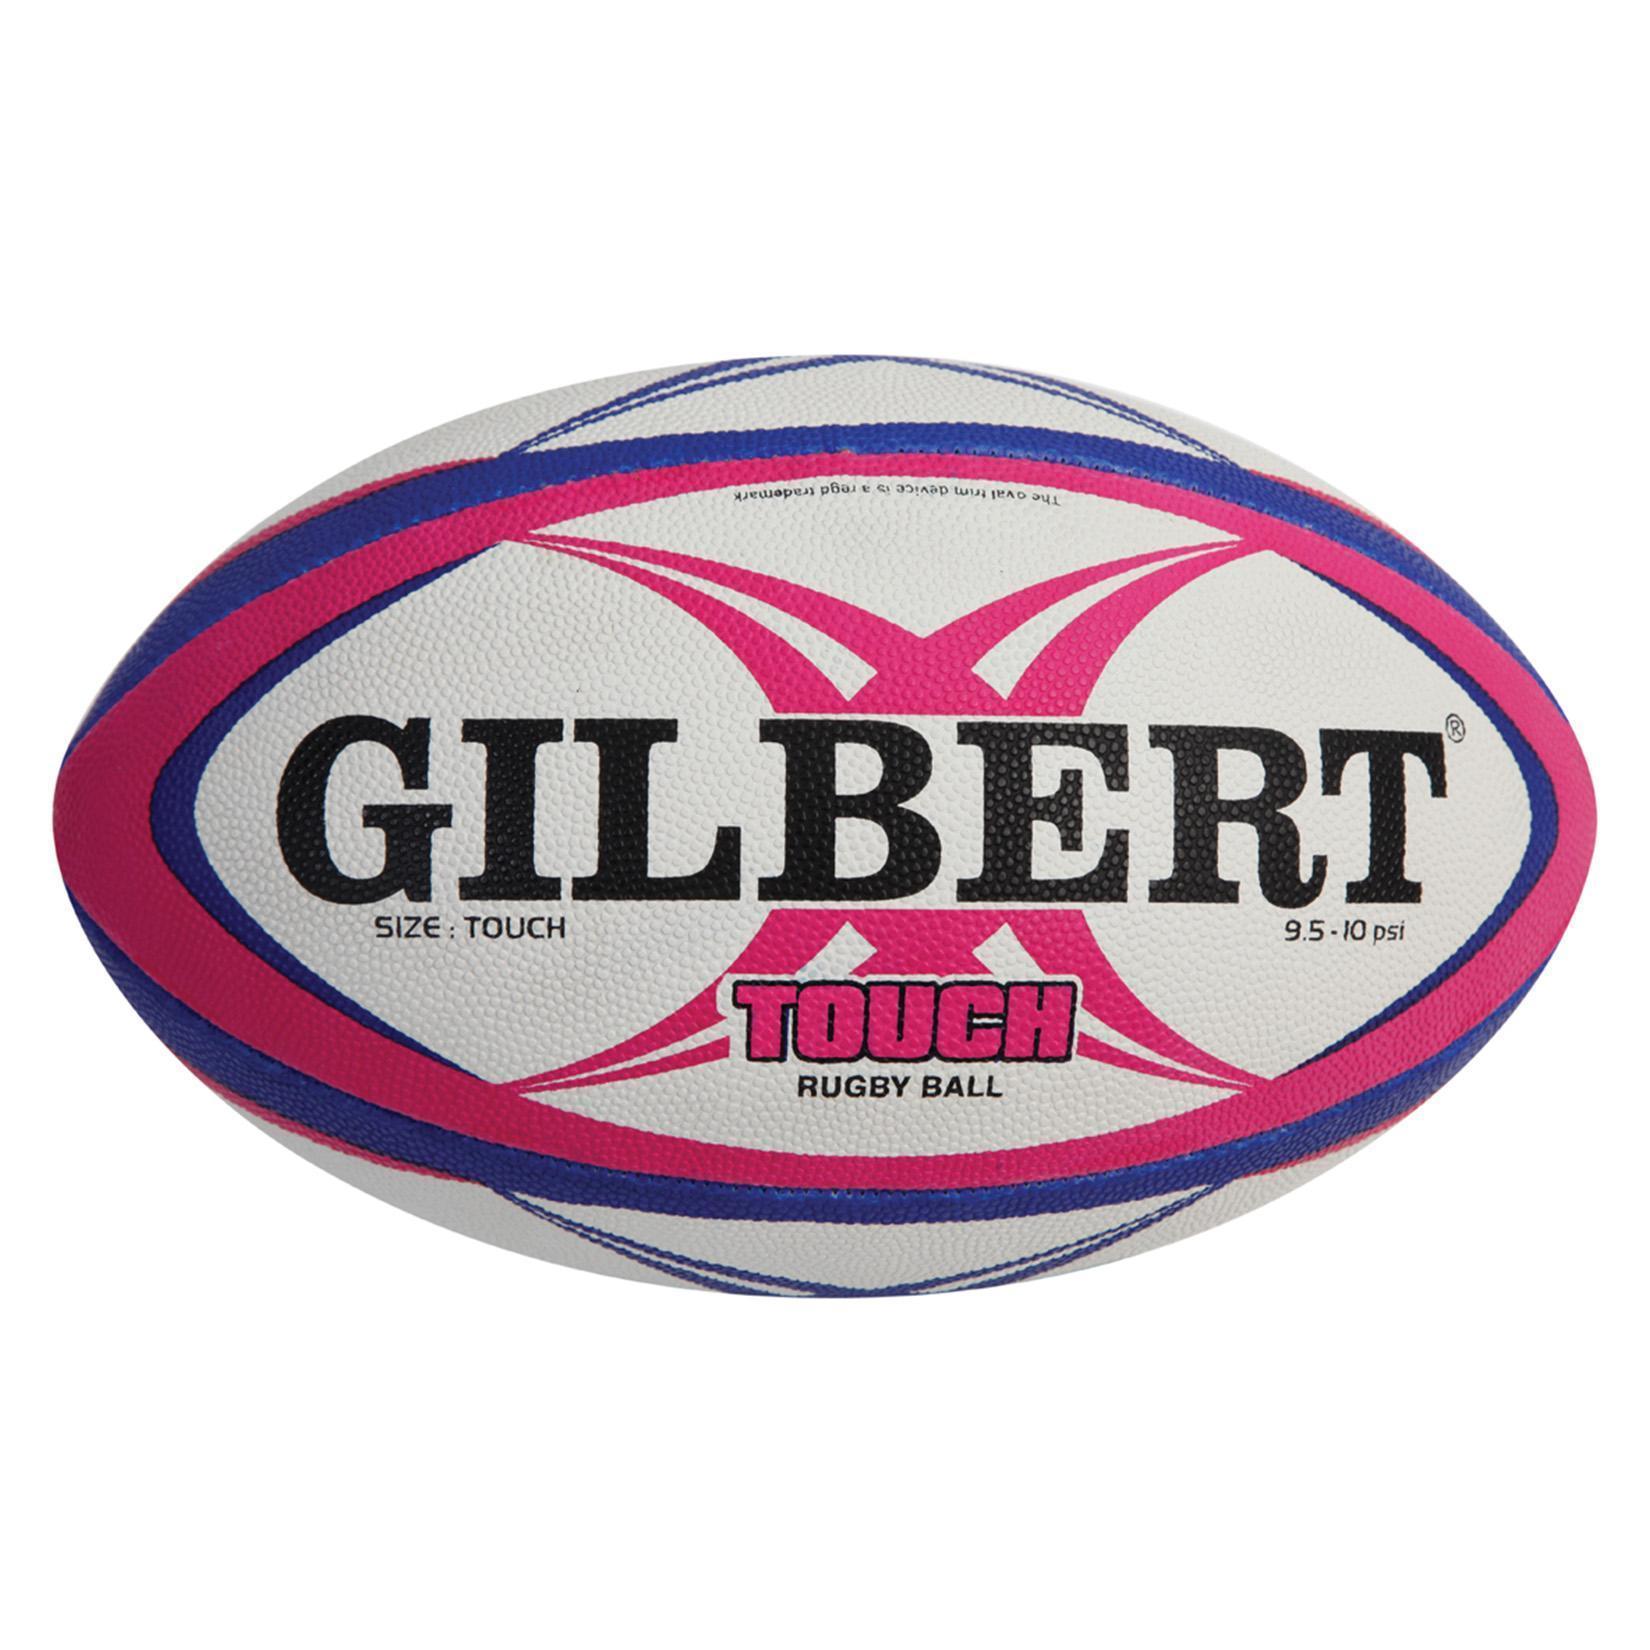 Gilbert Touch Rugby Ball